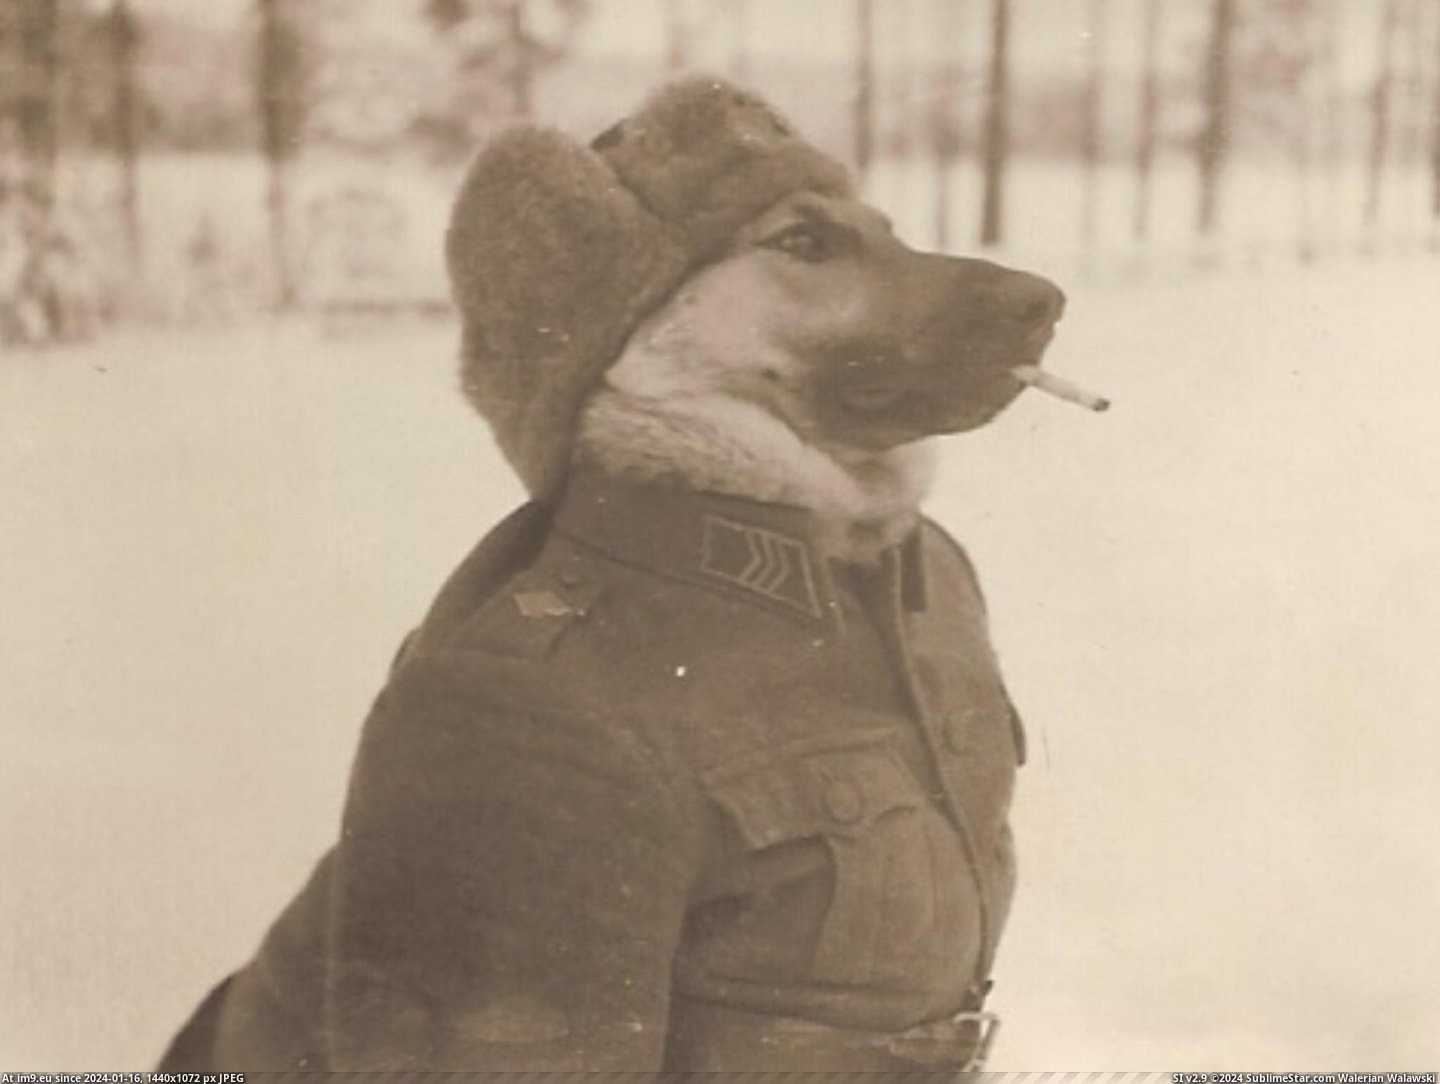 #World #Finnish #Sergeant #War [Pics] Finnish sergeant in second world war. Pic. (Image of album My r/PICS favs))